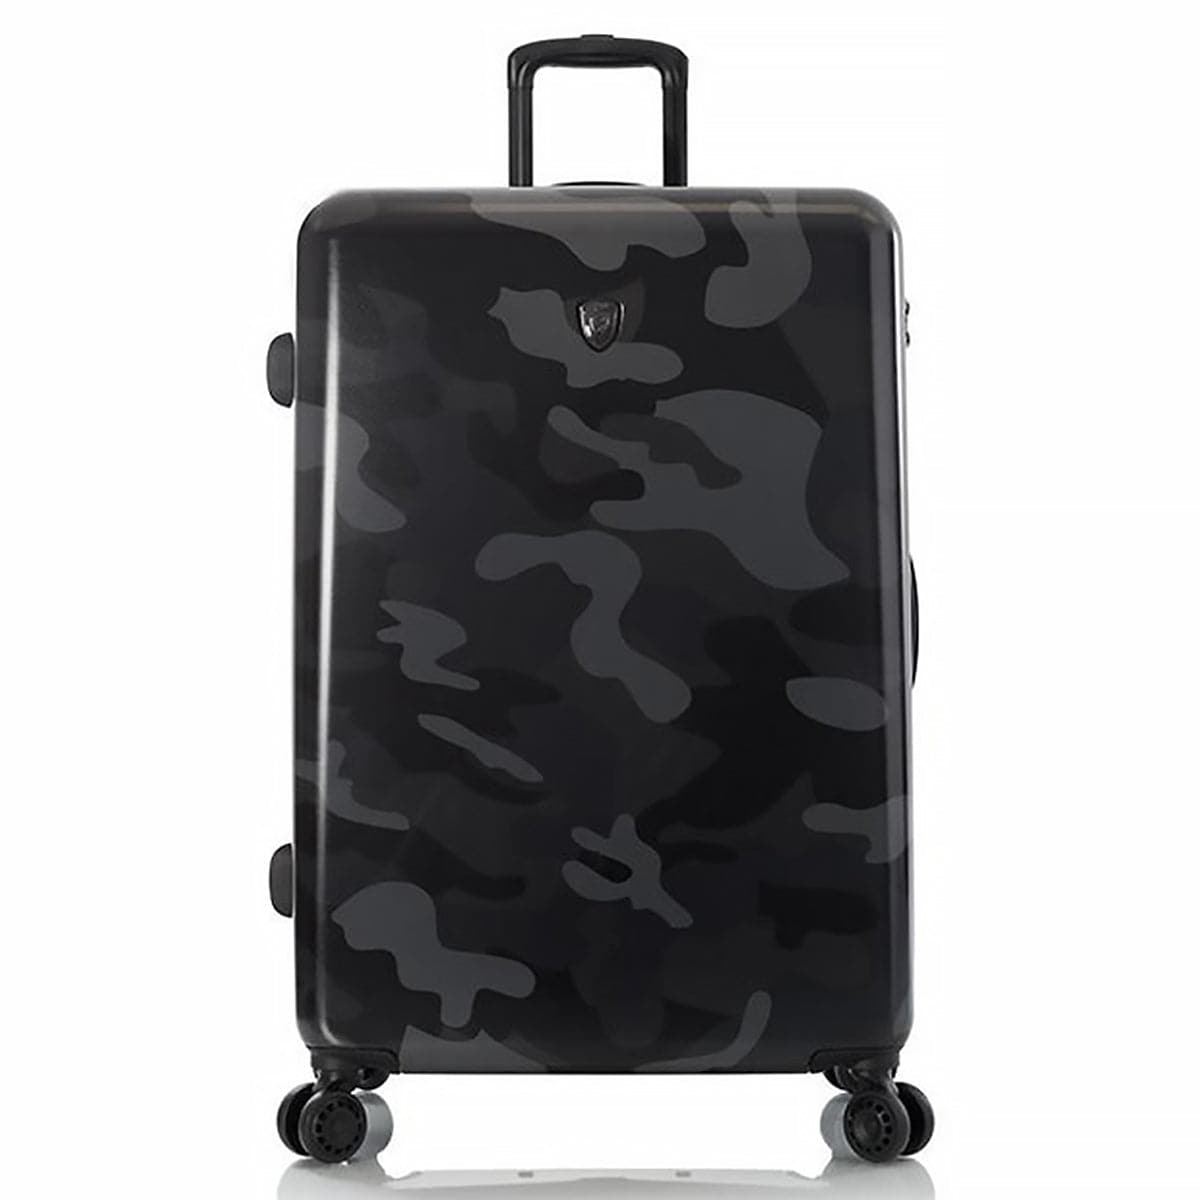 Heys Camo Fashion Spinner 3 Piece Luggage Set